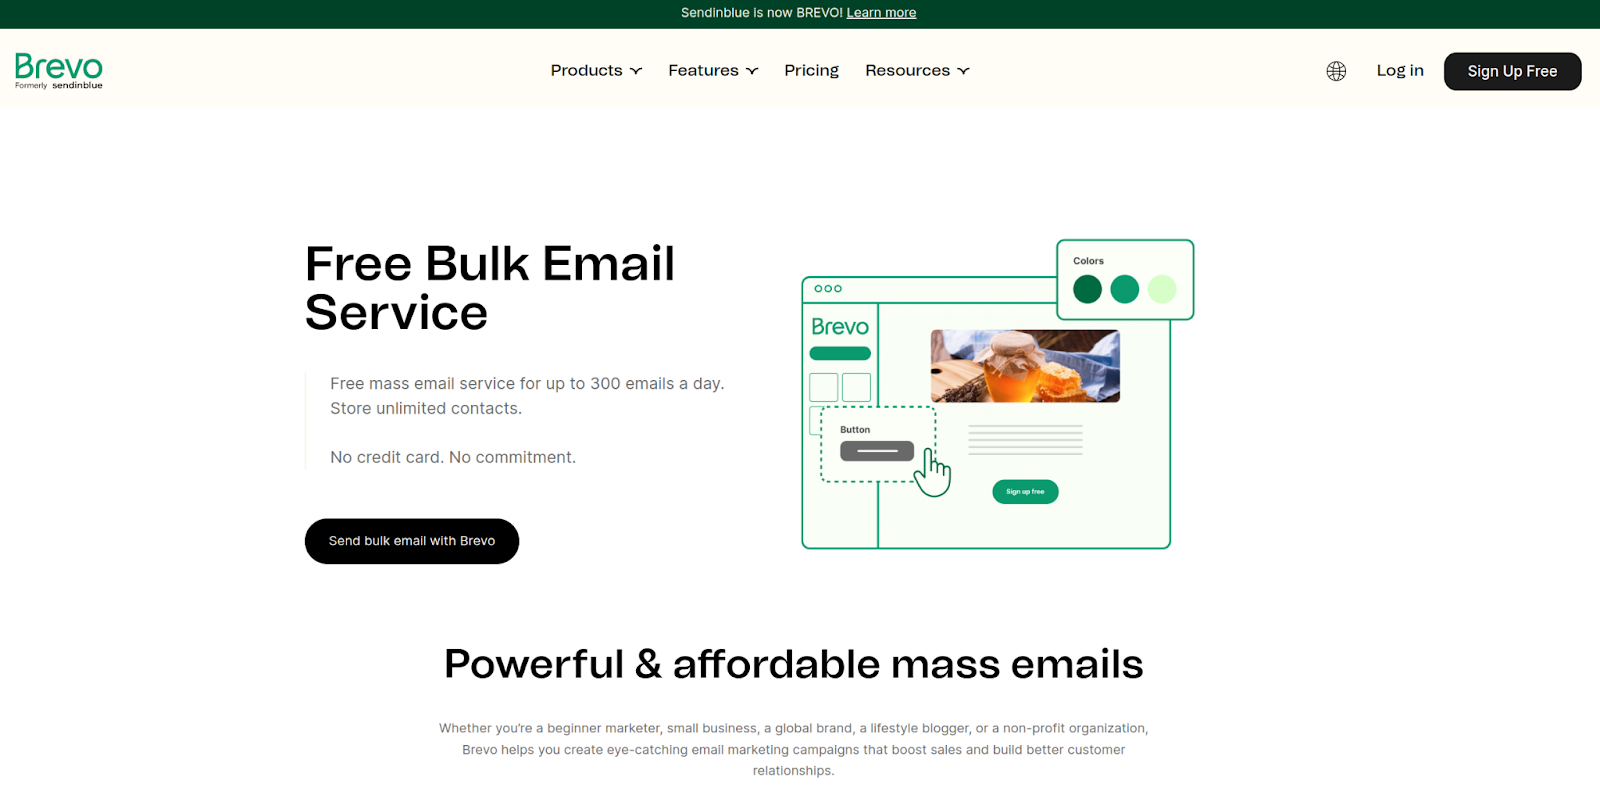 Brevo, formerly Sendinblue email marketing tool